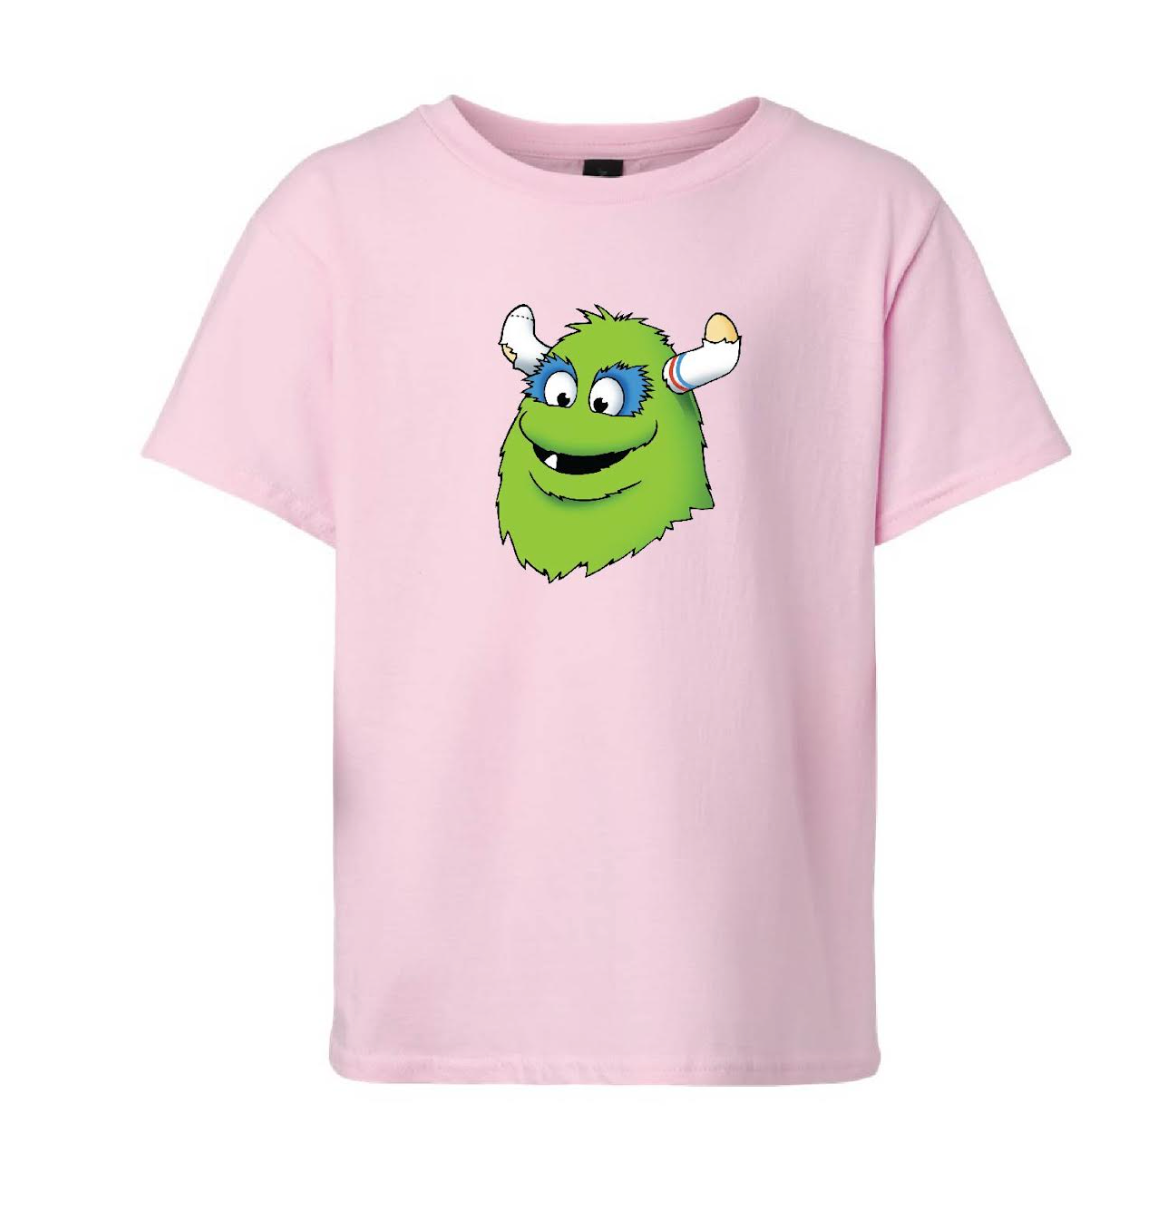 Socksquatch Toddler T-Shirt